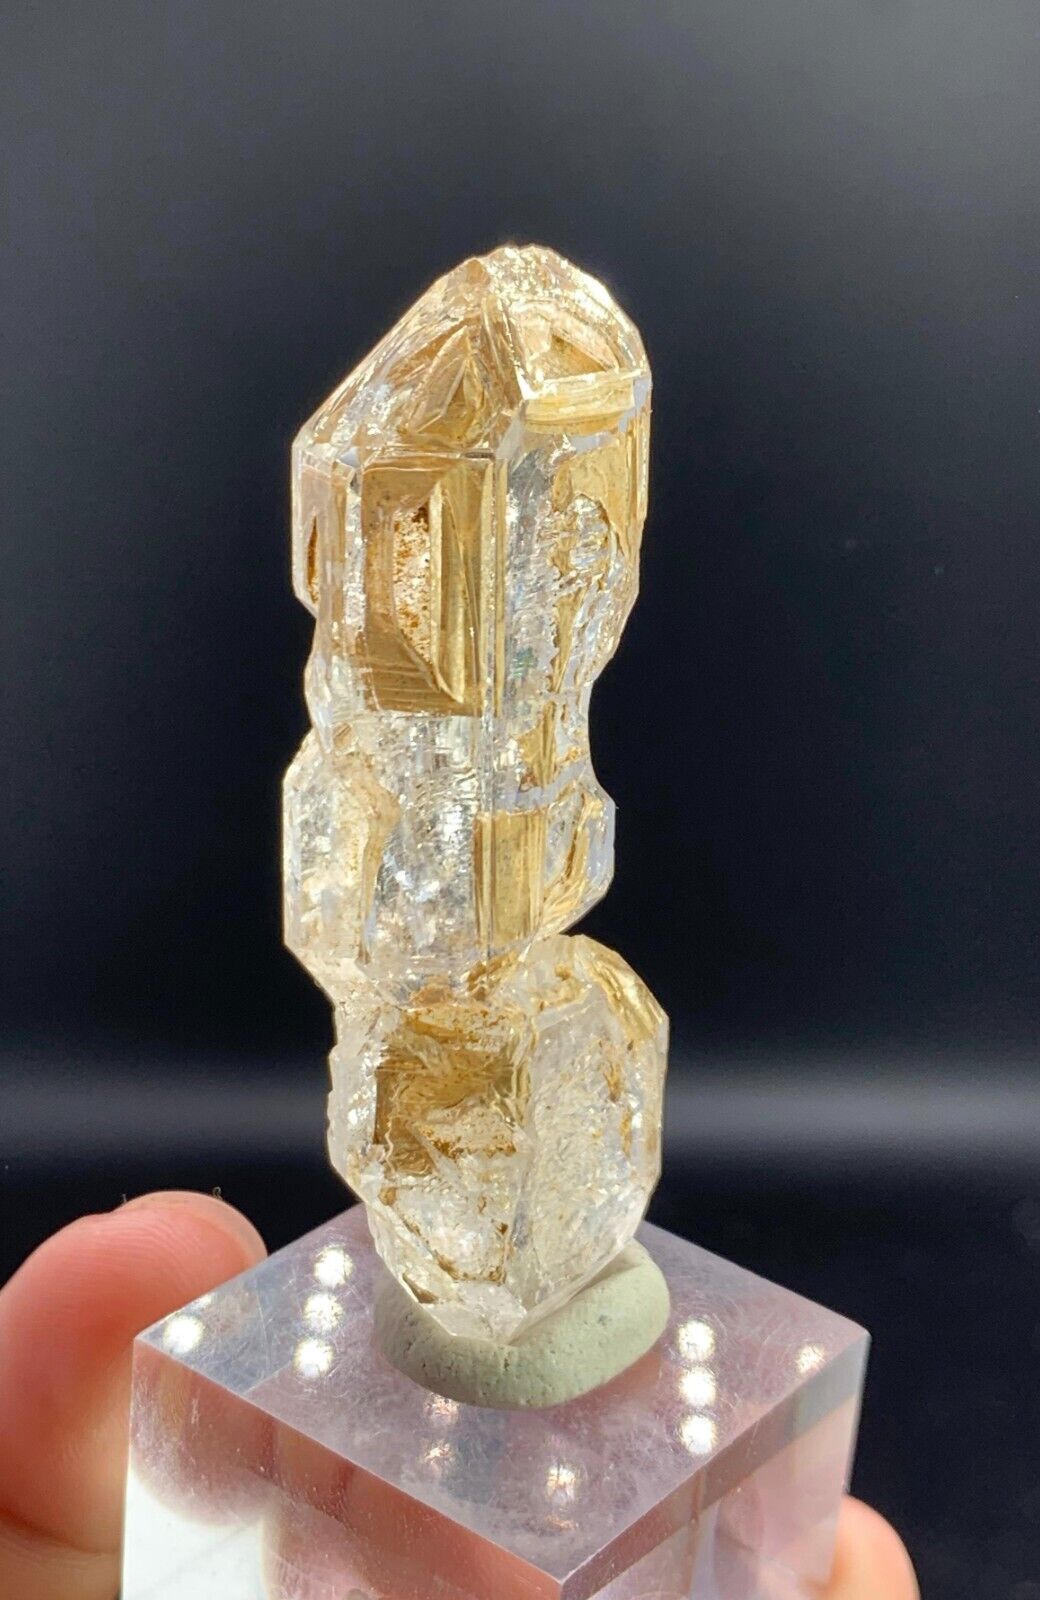 22.2 Gram. Very Unique Terminated Tall Natural Window Quartz Crystal.